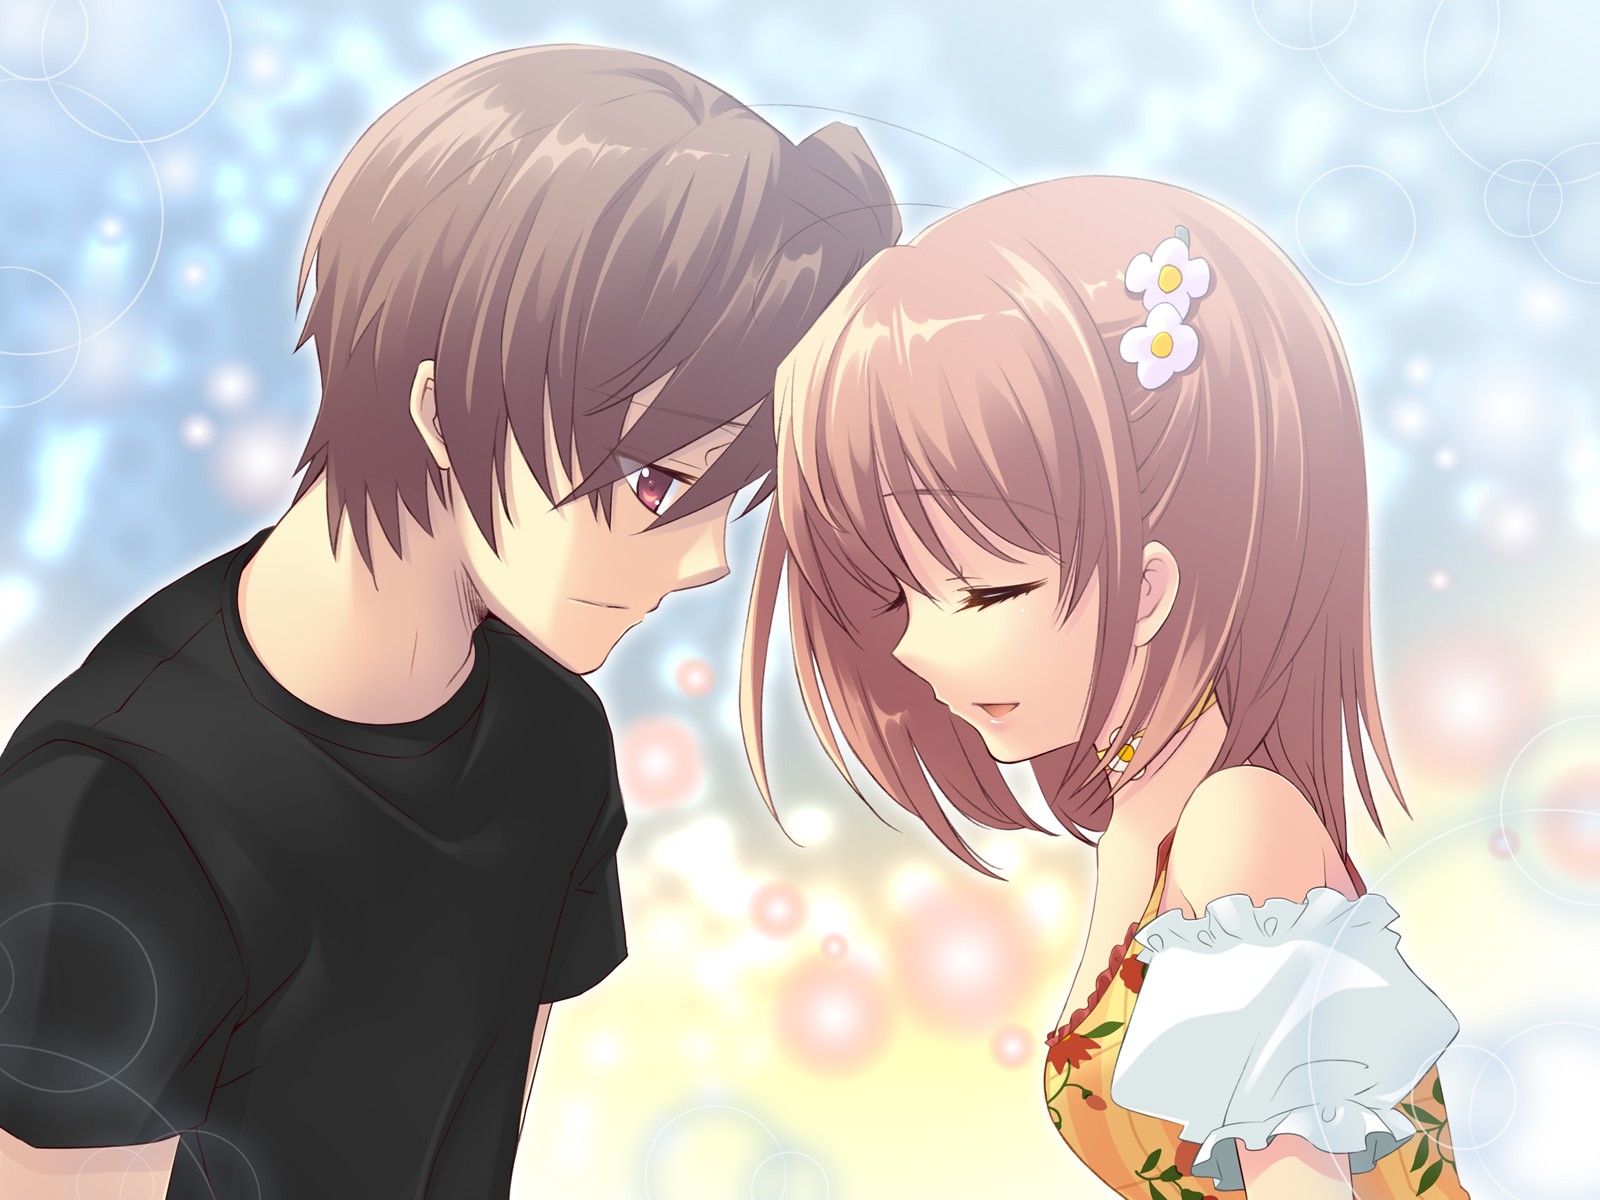 Hd Cute Anime Couple Backgrounds - Pixelstalk.net